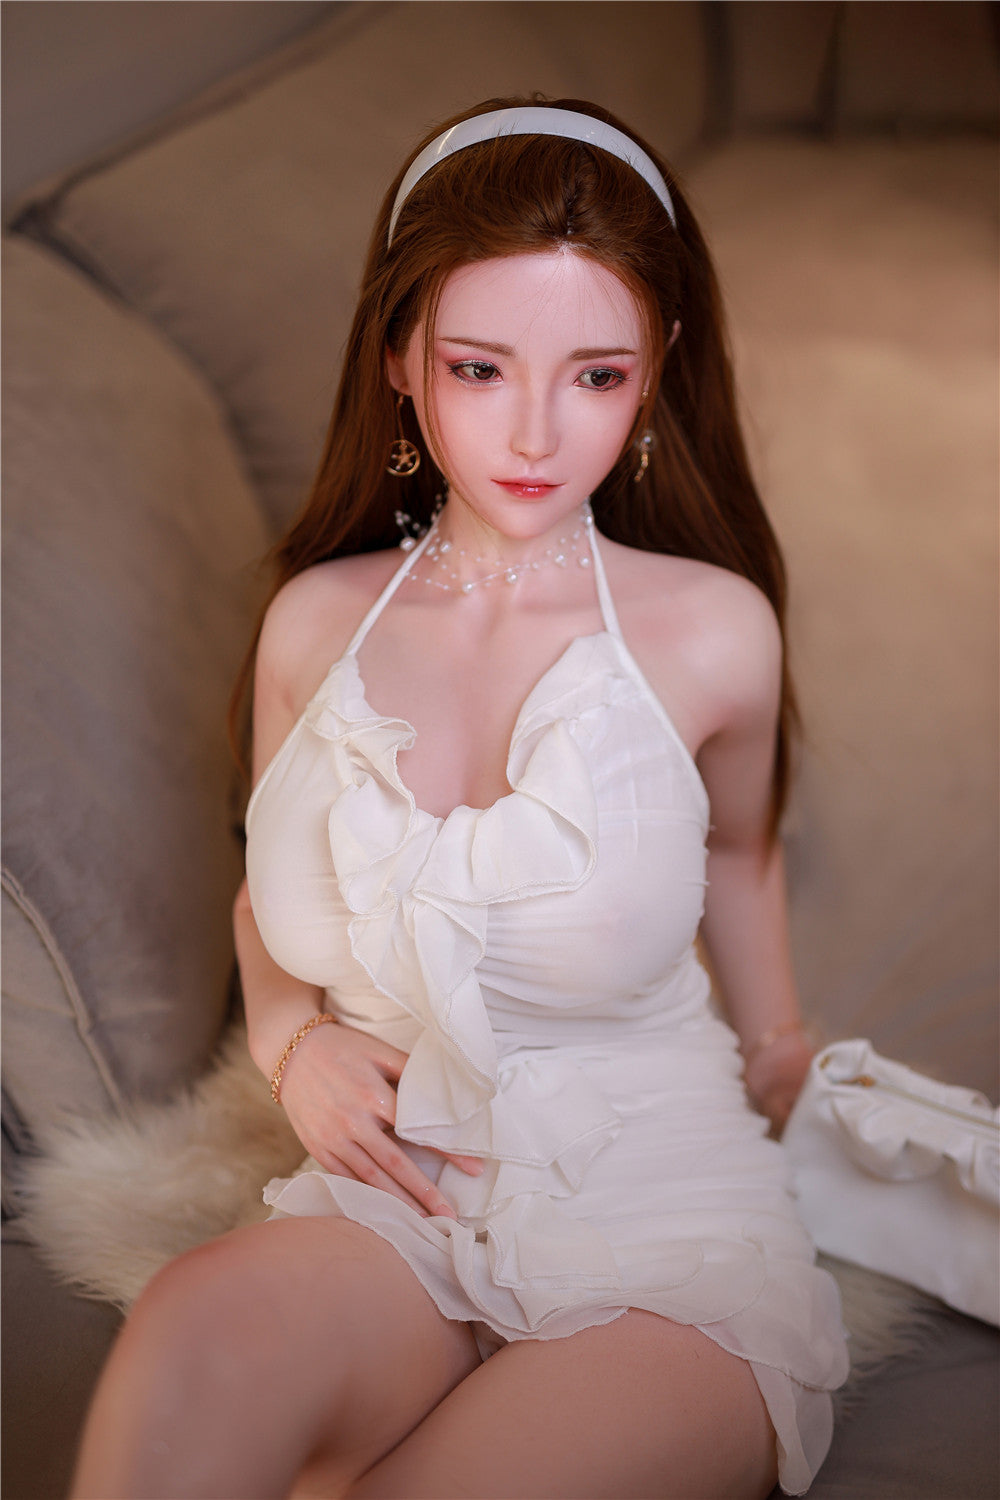 JY Doll - Realistic Sex Doll - 5ft 7in (170cm) - Madison - Love Dolls 4U